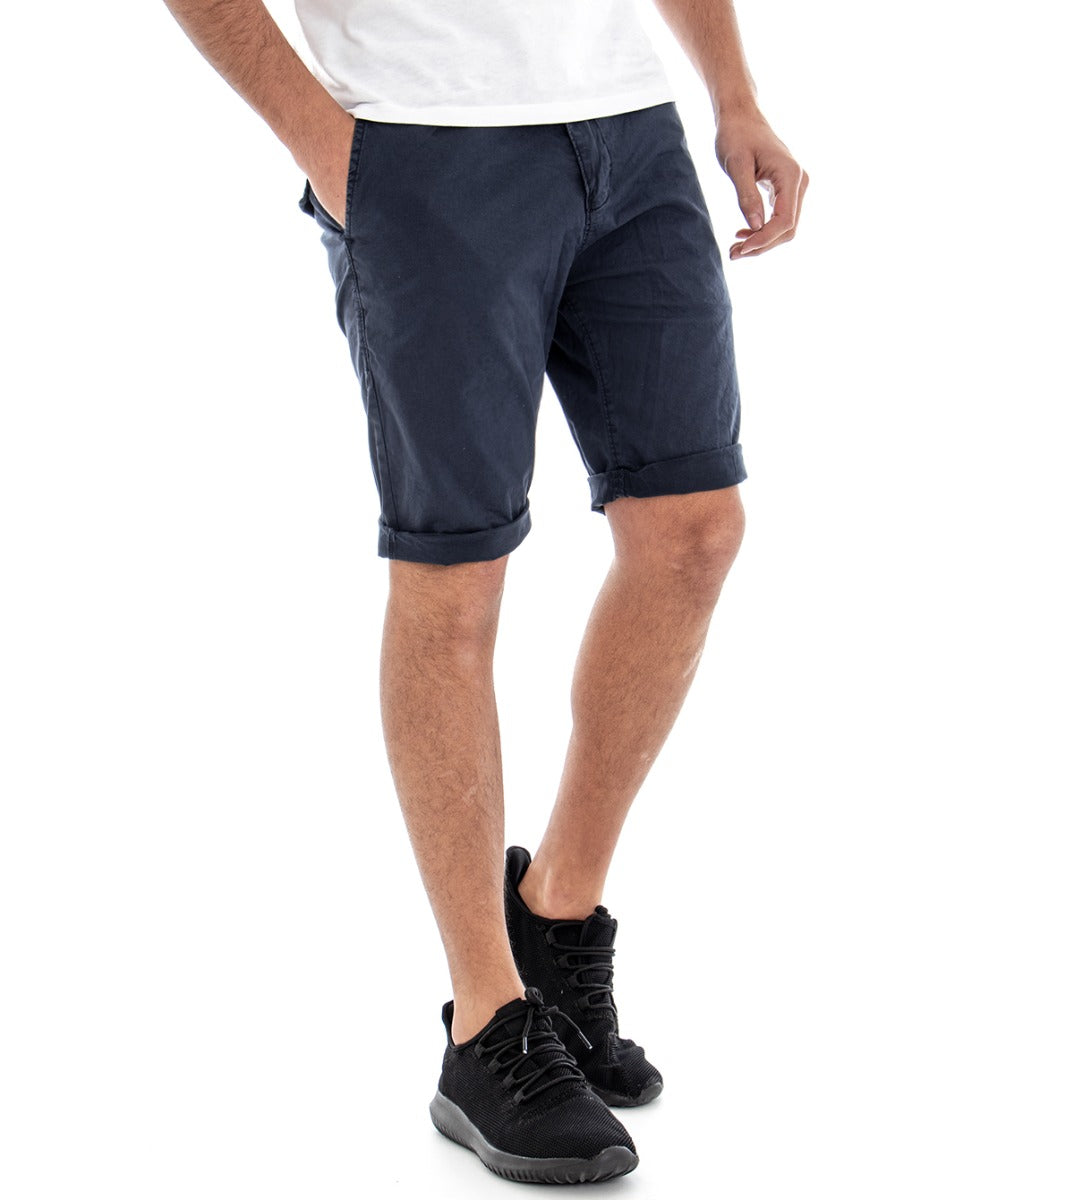 Bermuda Pantaloncino Uomo Corto Tasca America Tinta Unita Blu Slim GIOSAL-PC1300A